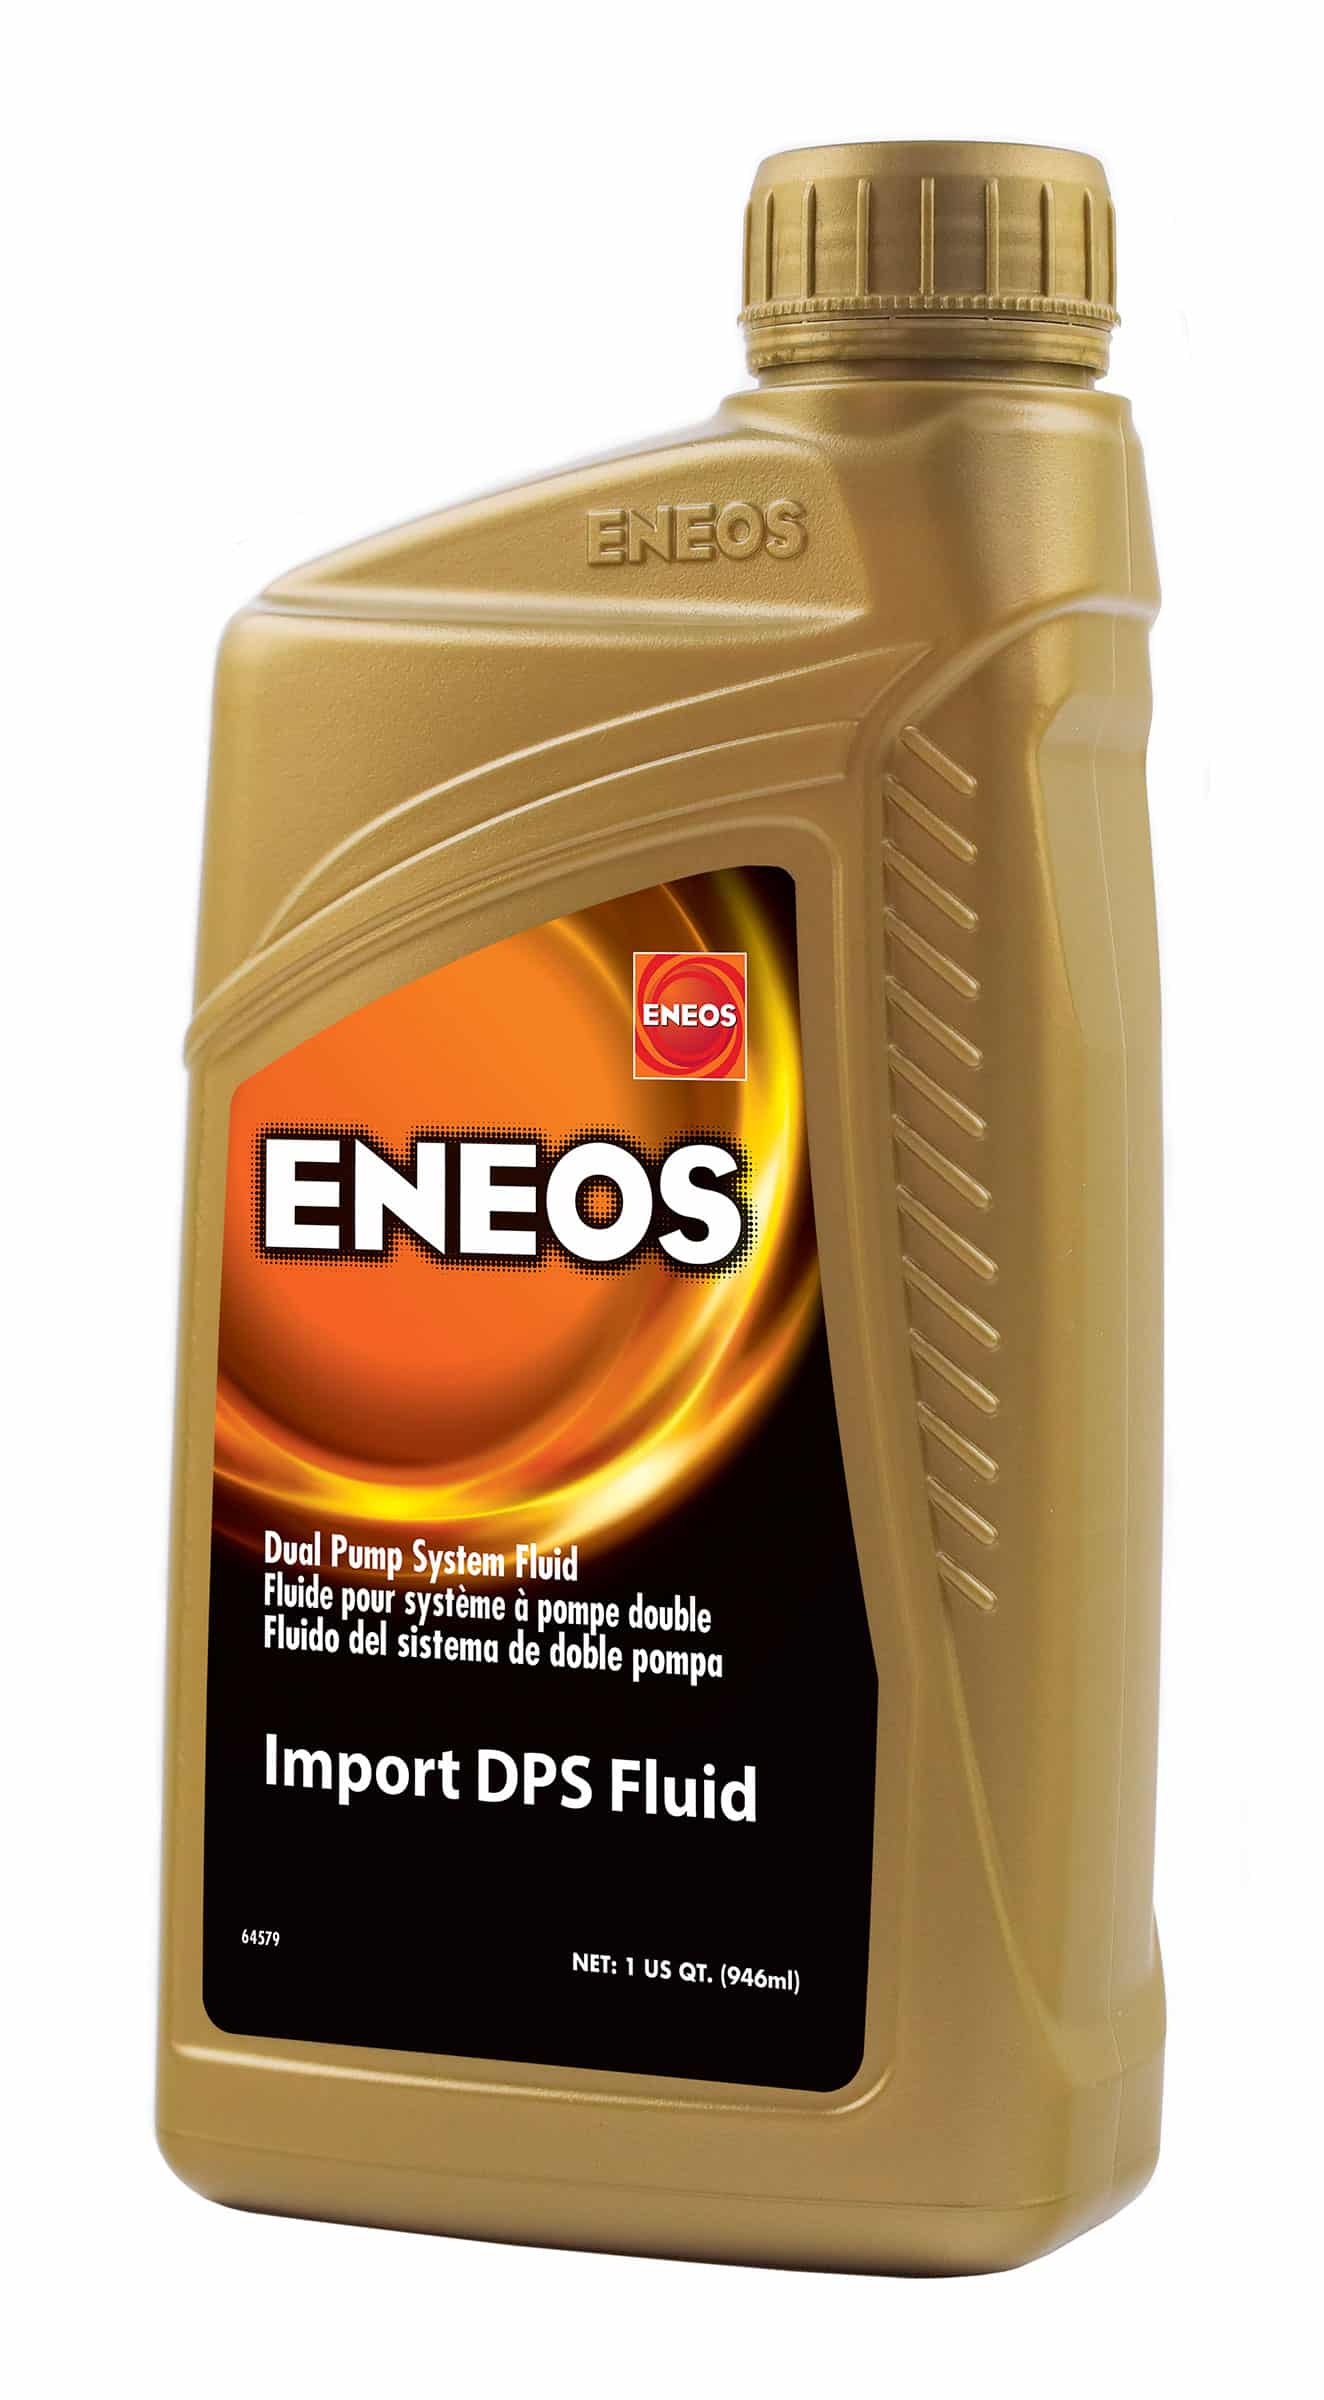 ENEOS IMPORT DPS FLUID Turned